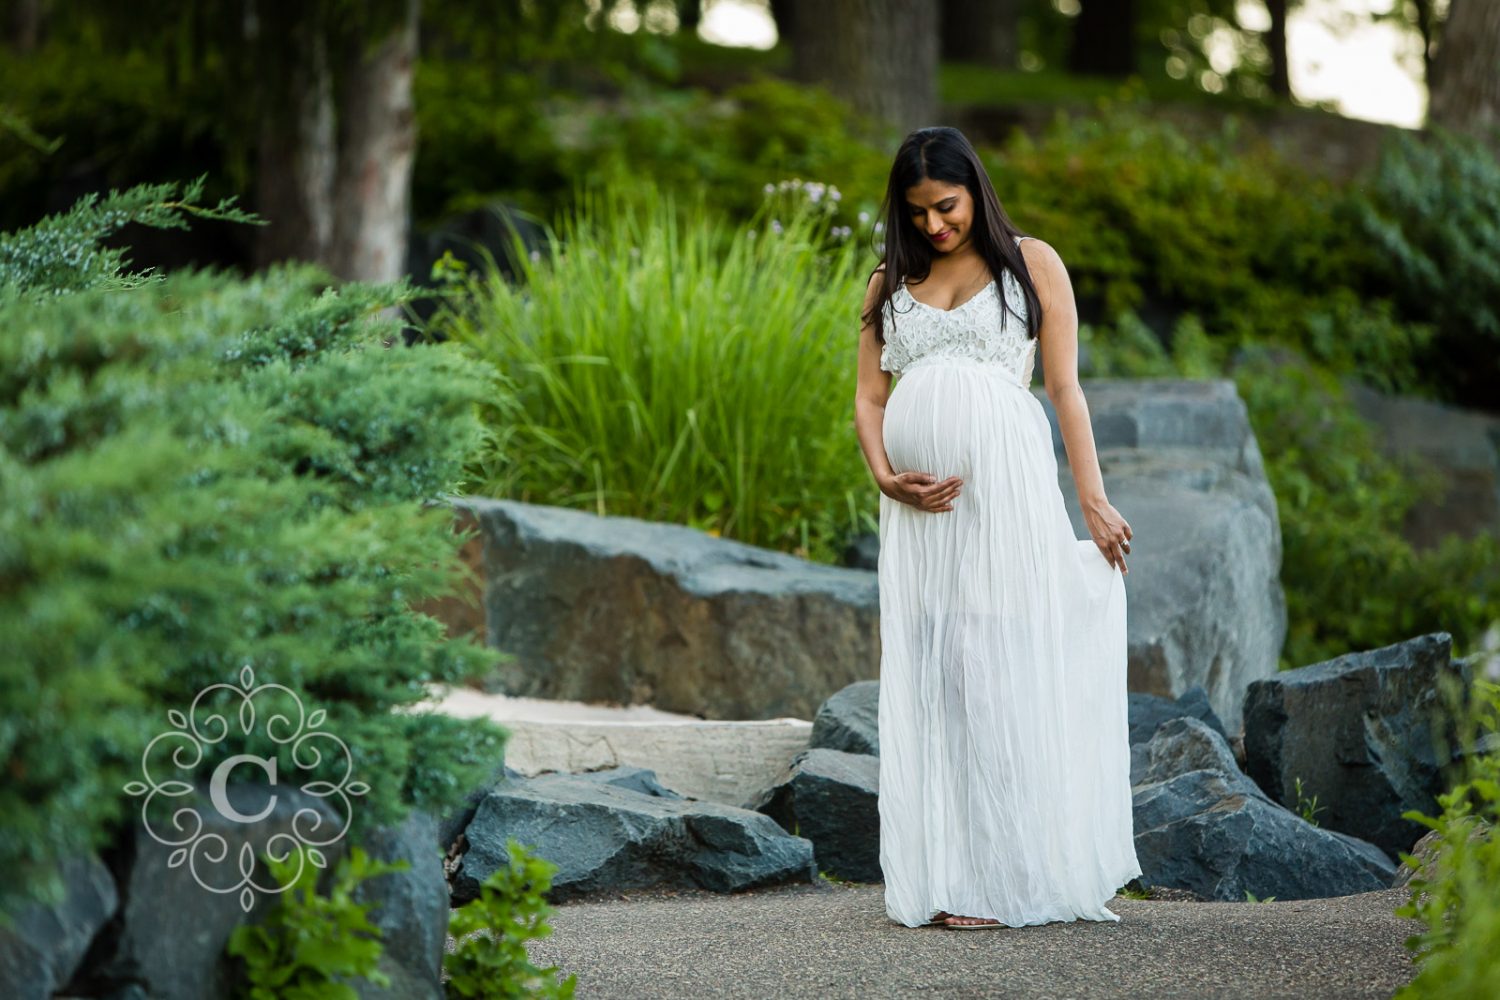 Minneapolis Maternity Photography by Carina Photographics